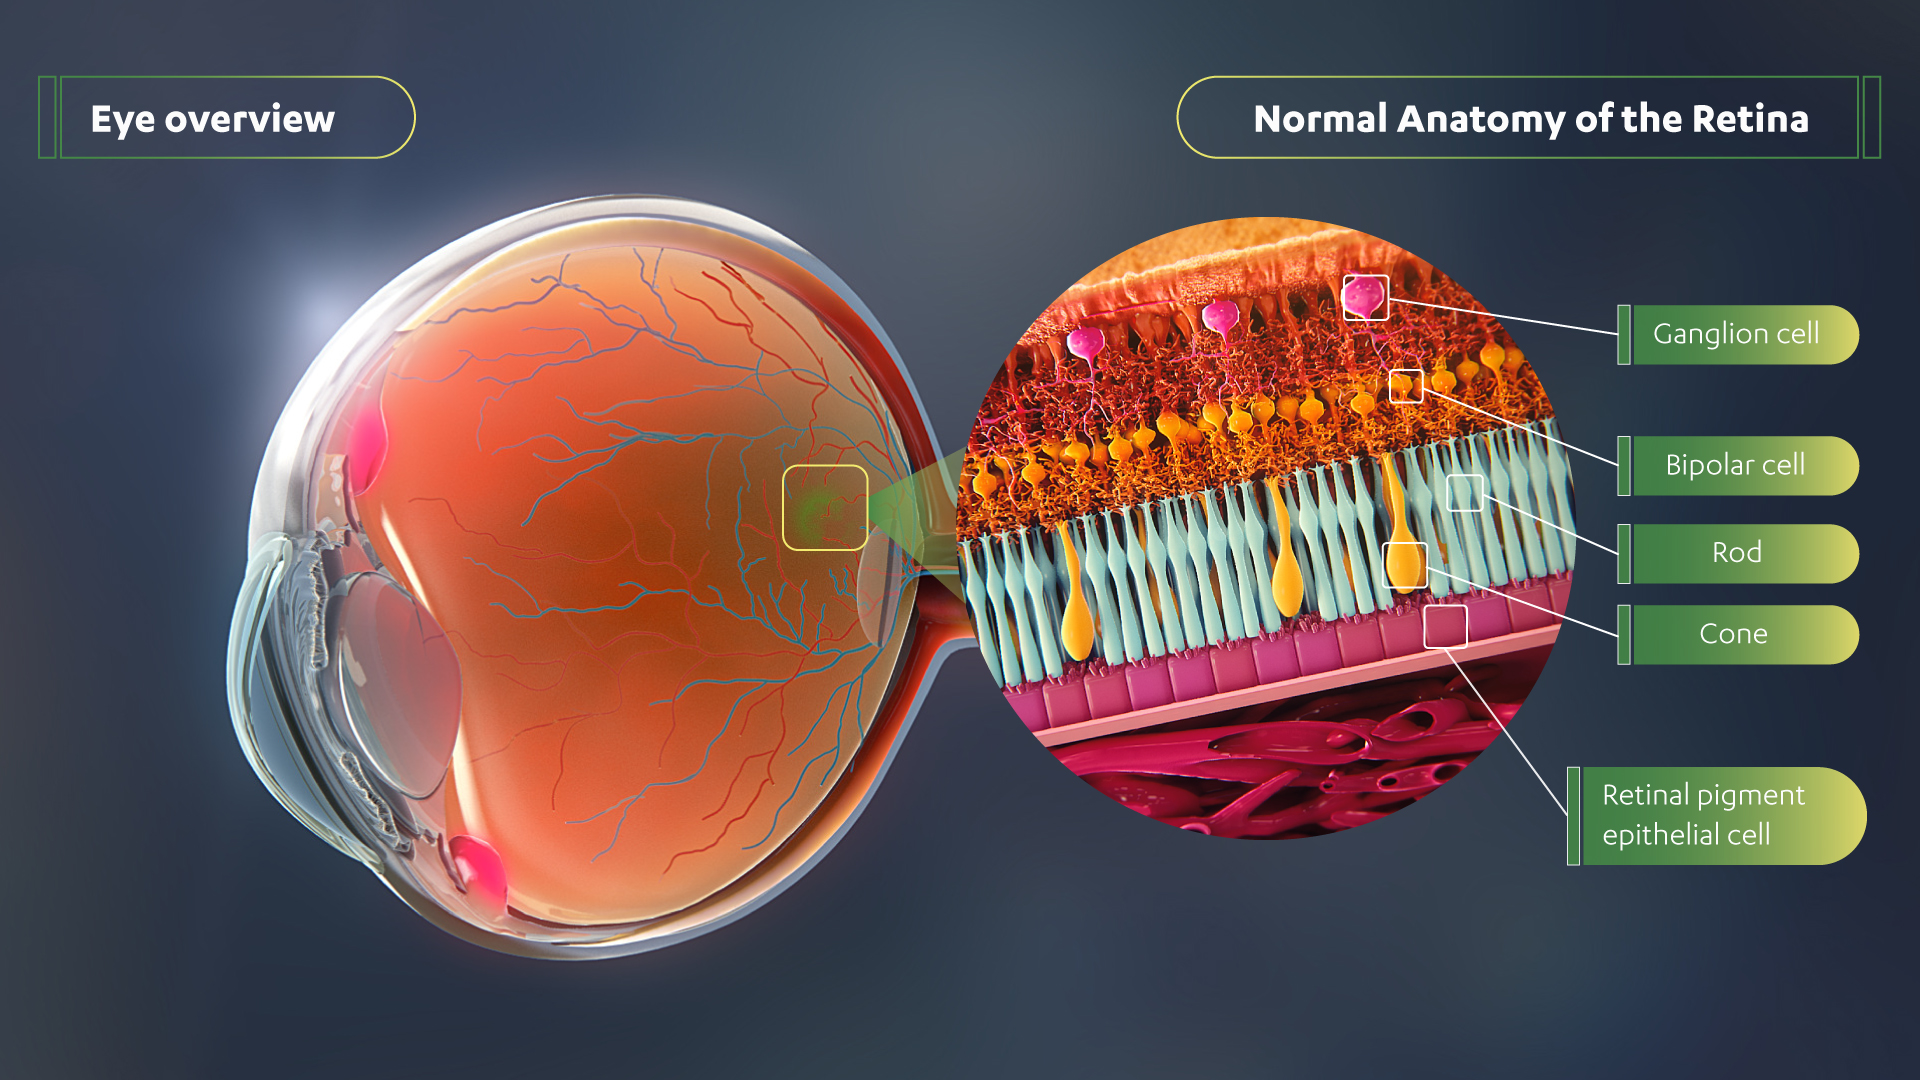 Normal anatomy of the retina